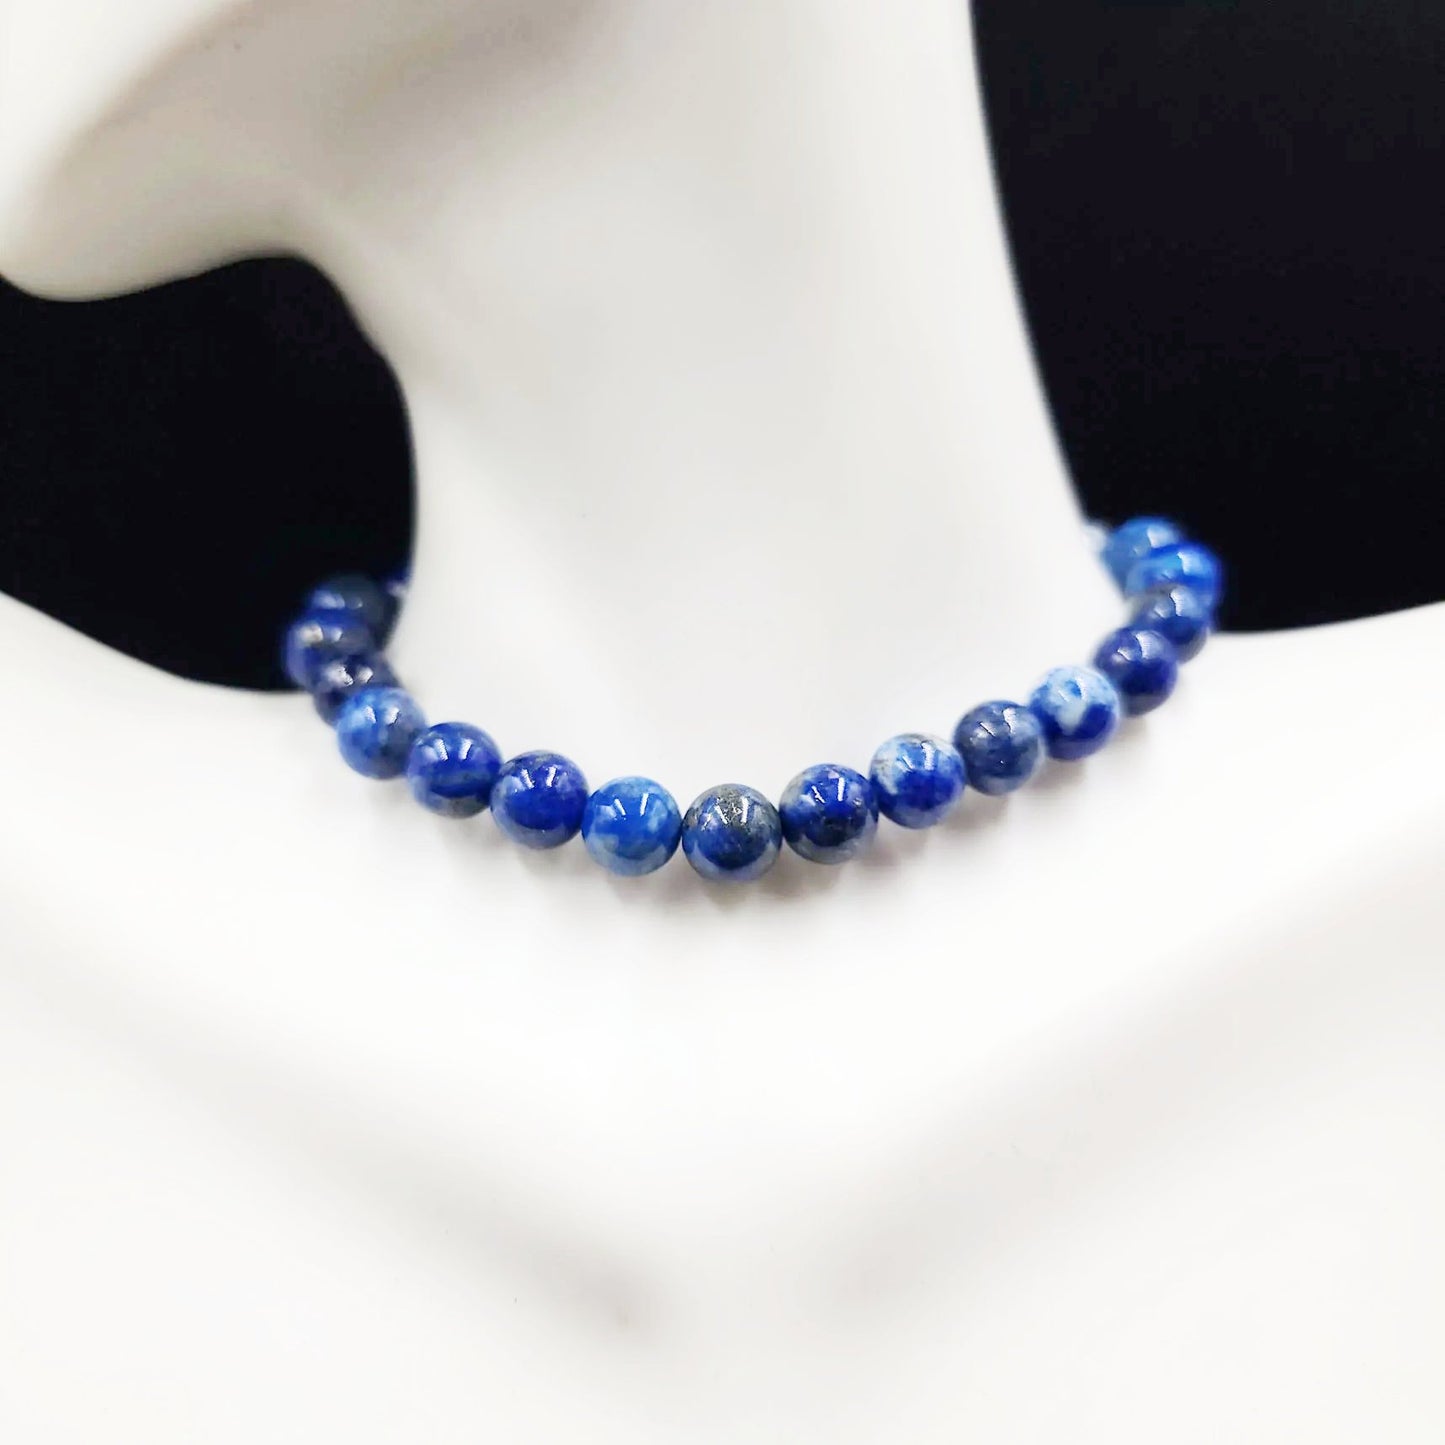 Lapis Lazuli Bead Bracelet 8mm